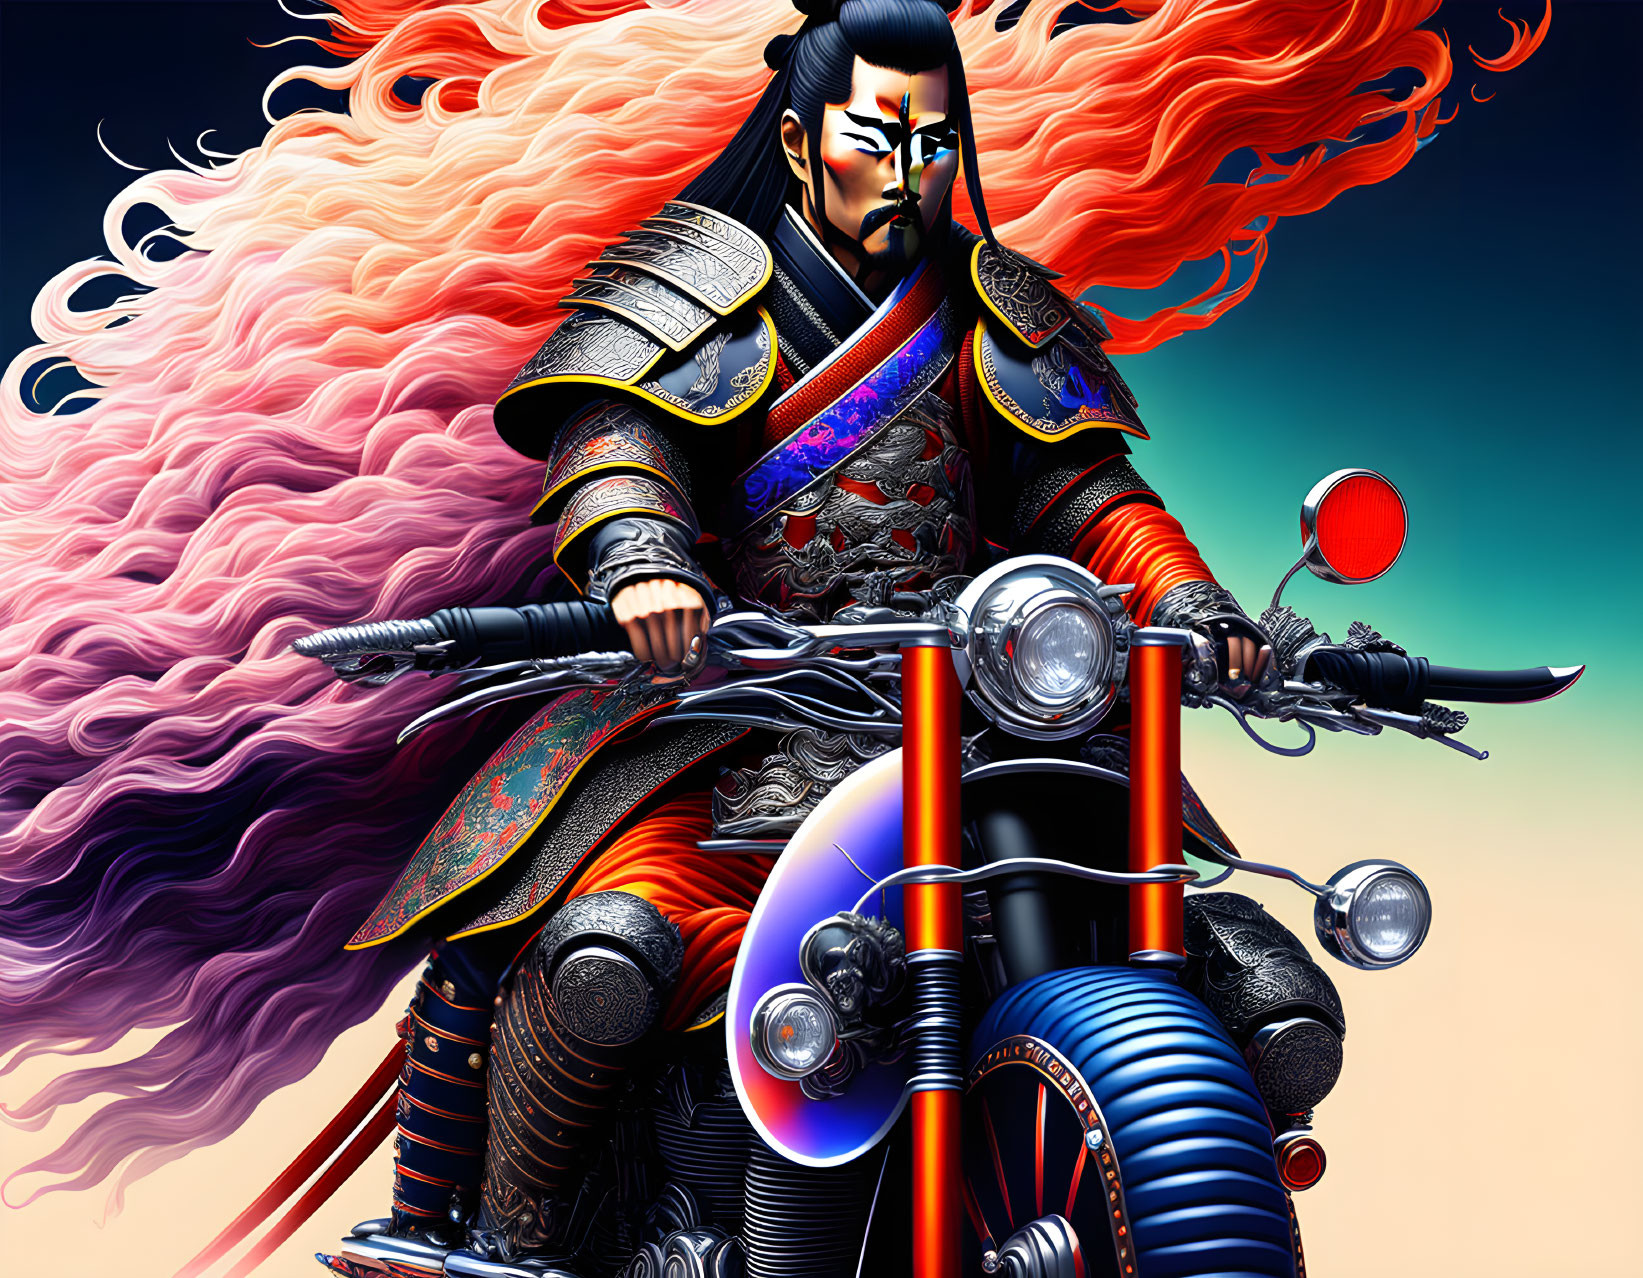 Samurai riding a sazuki motorcycle